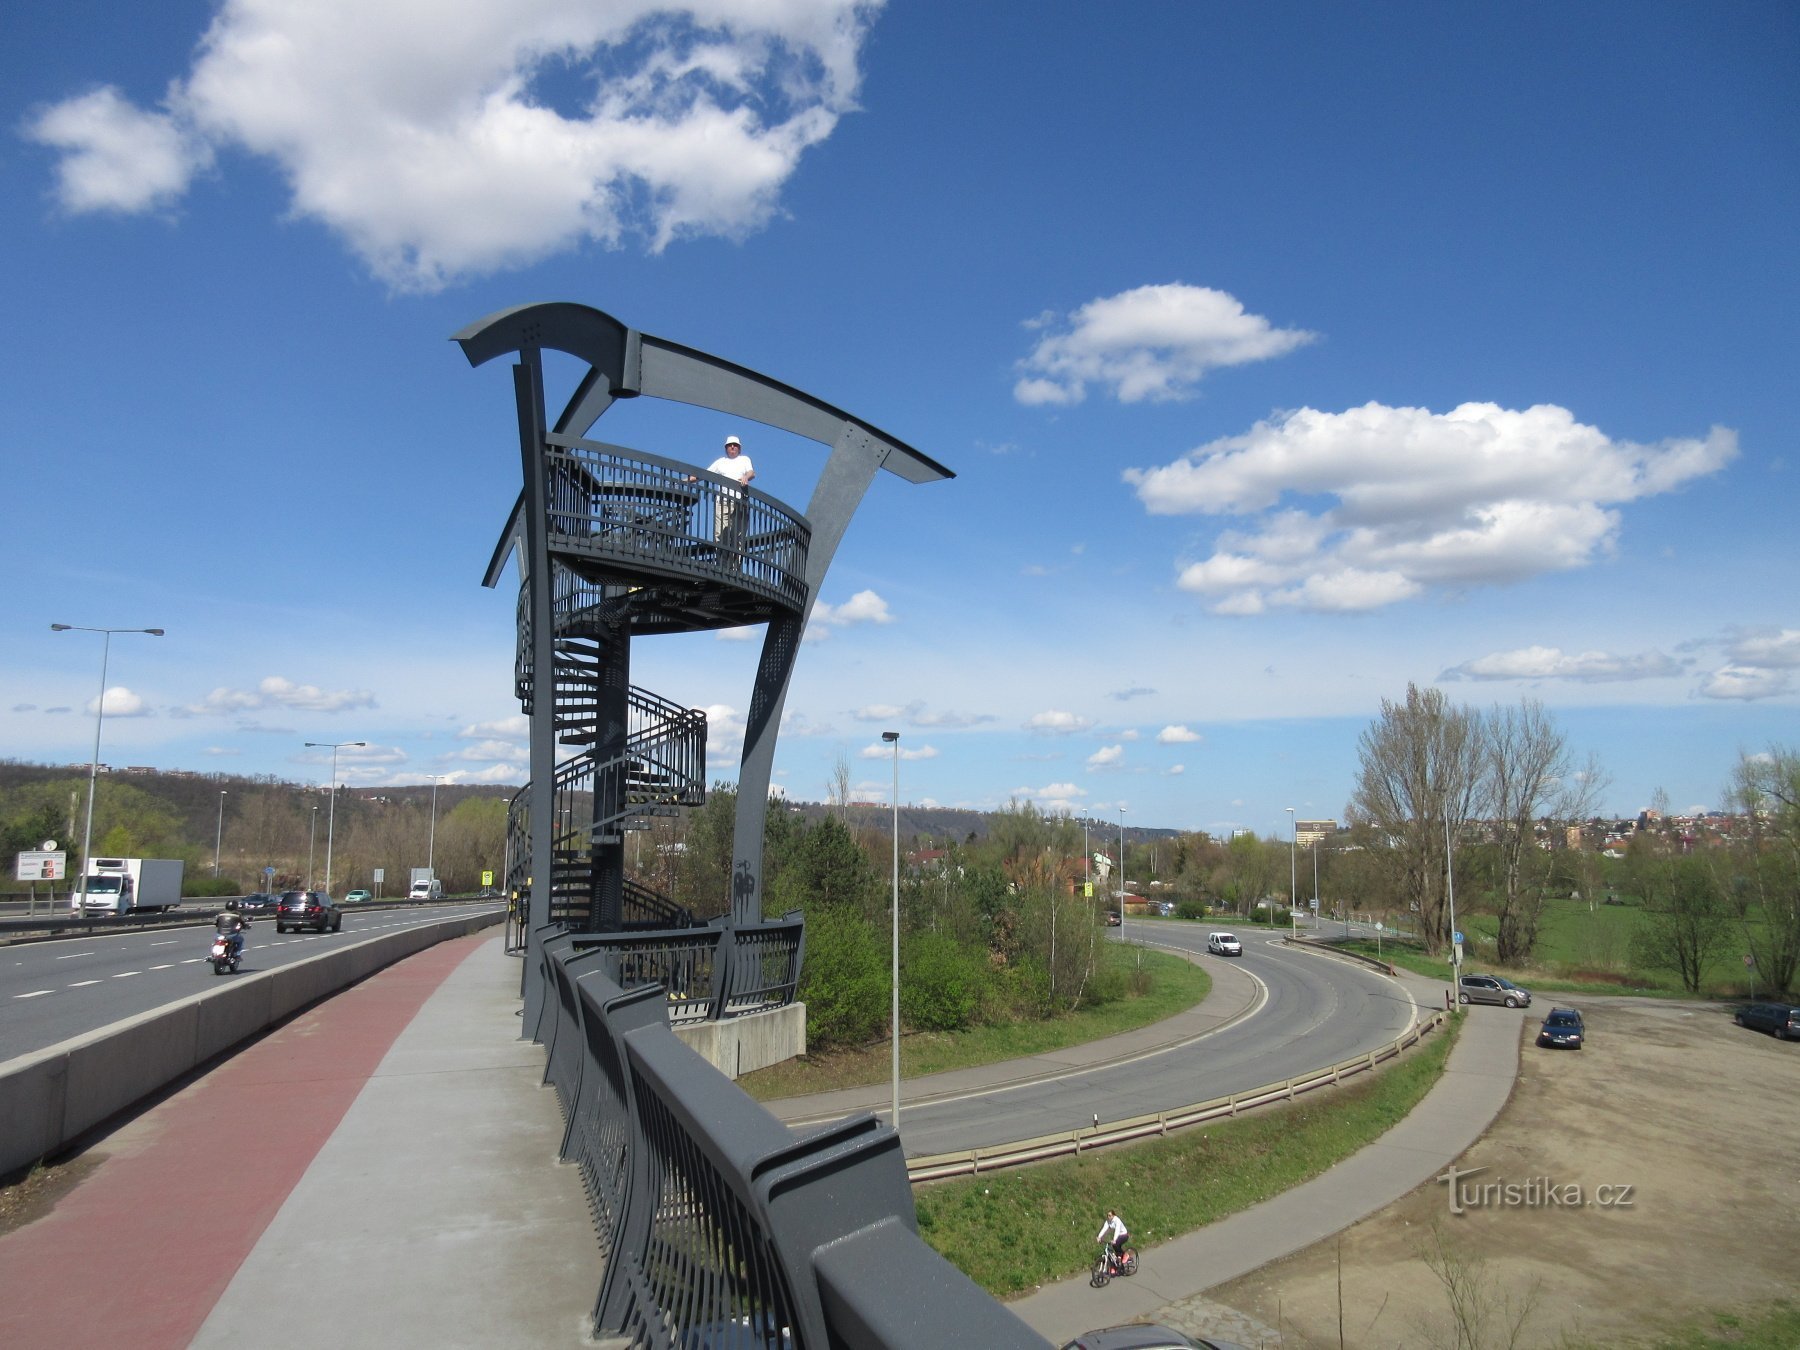 Lahovice - πύργοι παρατήρησης της γέφυρας Lahovice και η συμβολή των ποταμών Berounka και Vltava